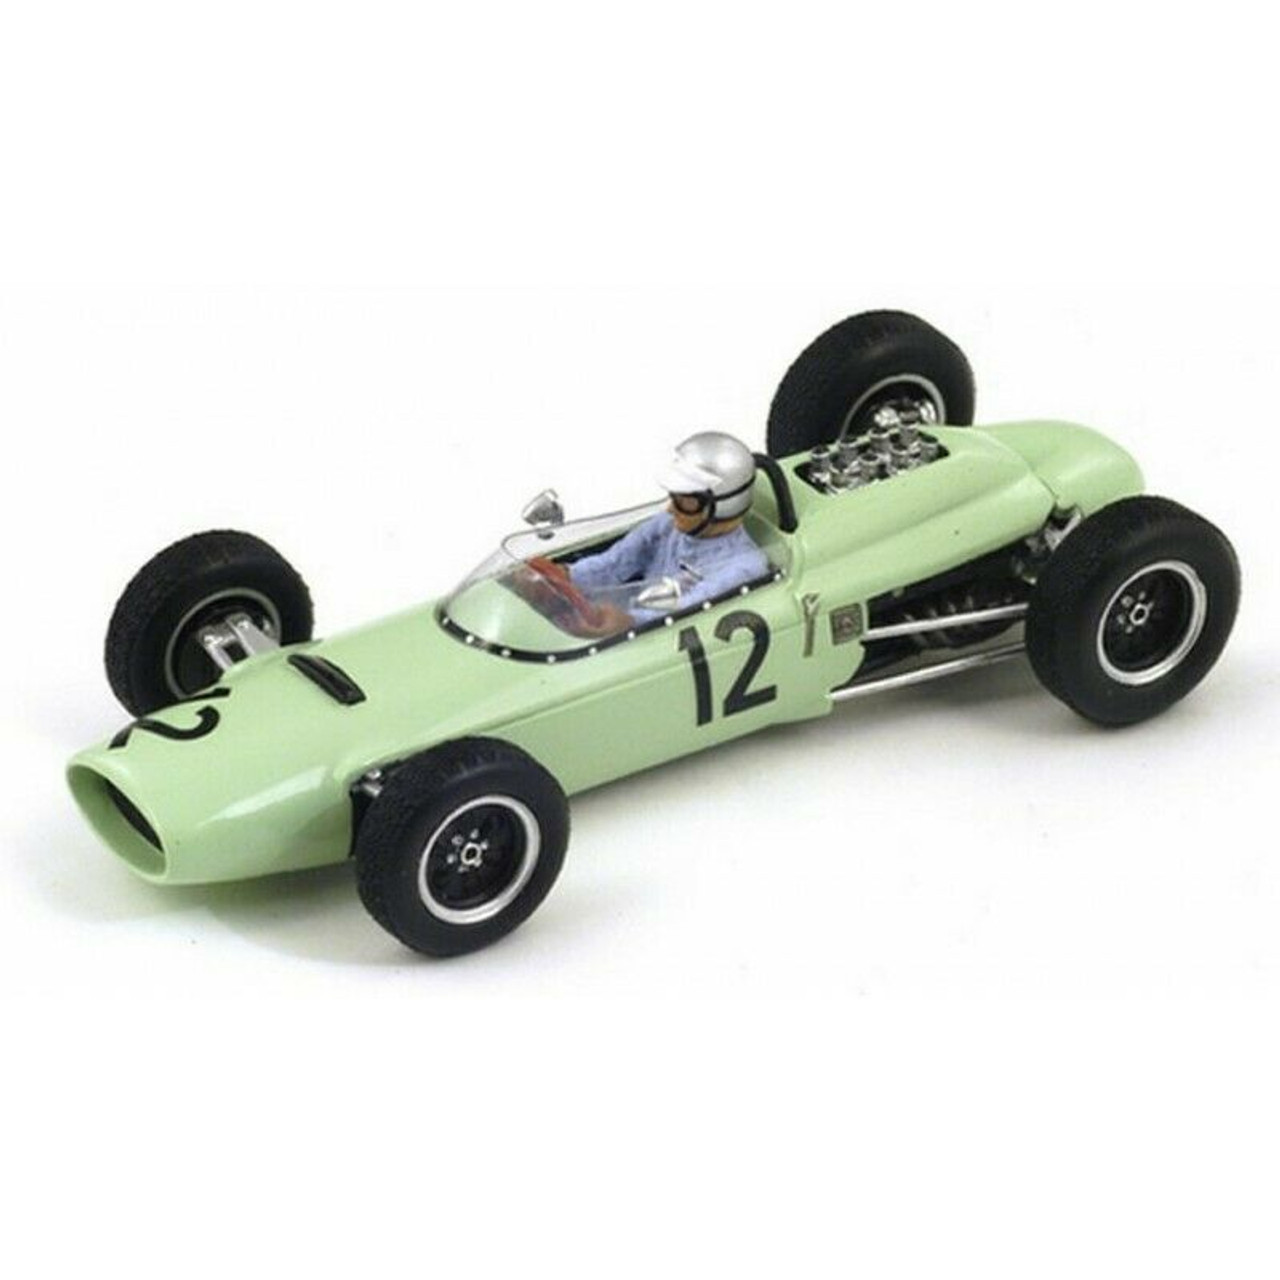 1/43 Lotus 24 n.12 Monaco GP 1963 Jim Hall model car by Spark